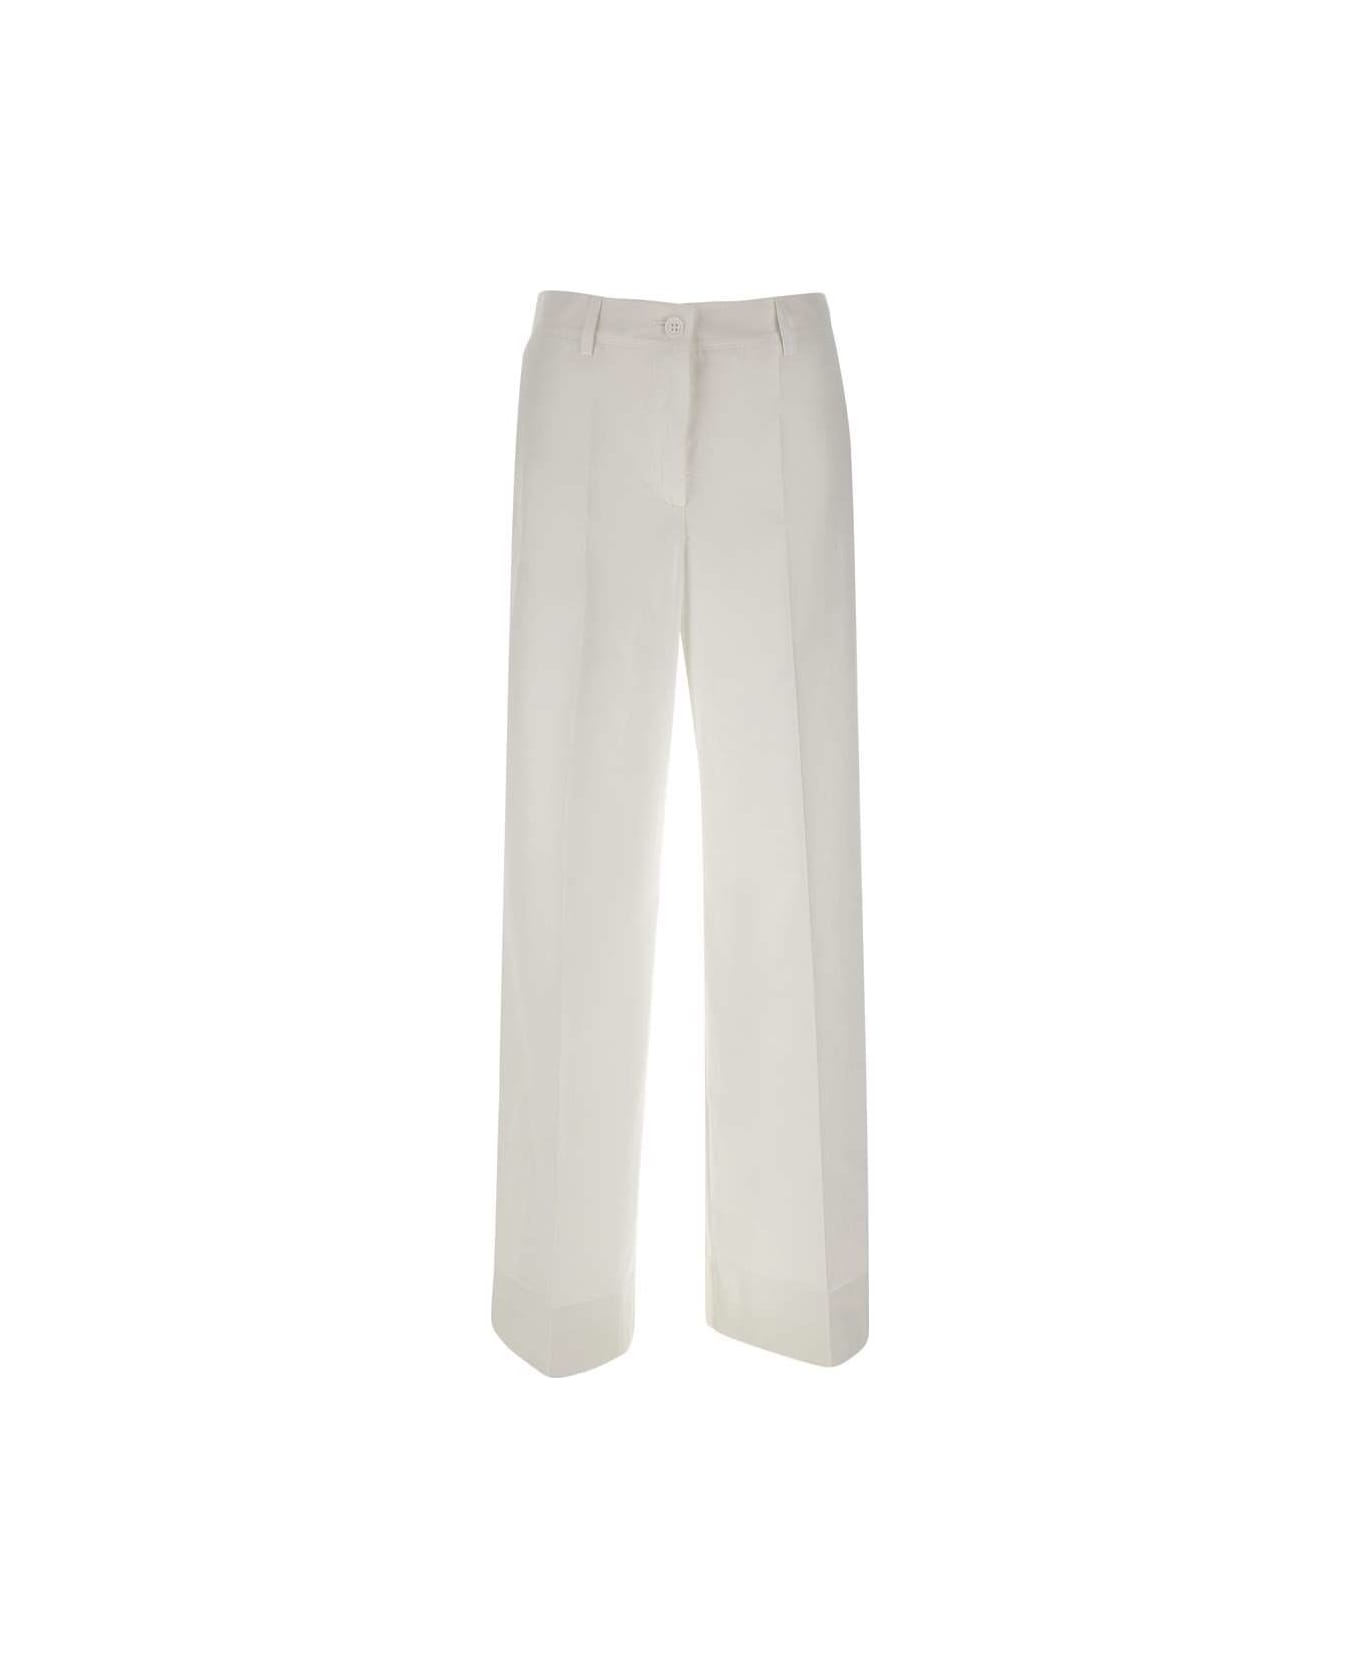 Parosh 'canyox24' Cotton Trousers - Bianco ボトムス